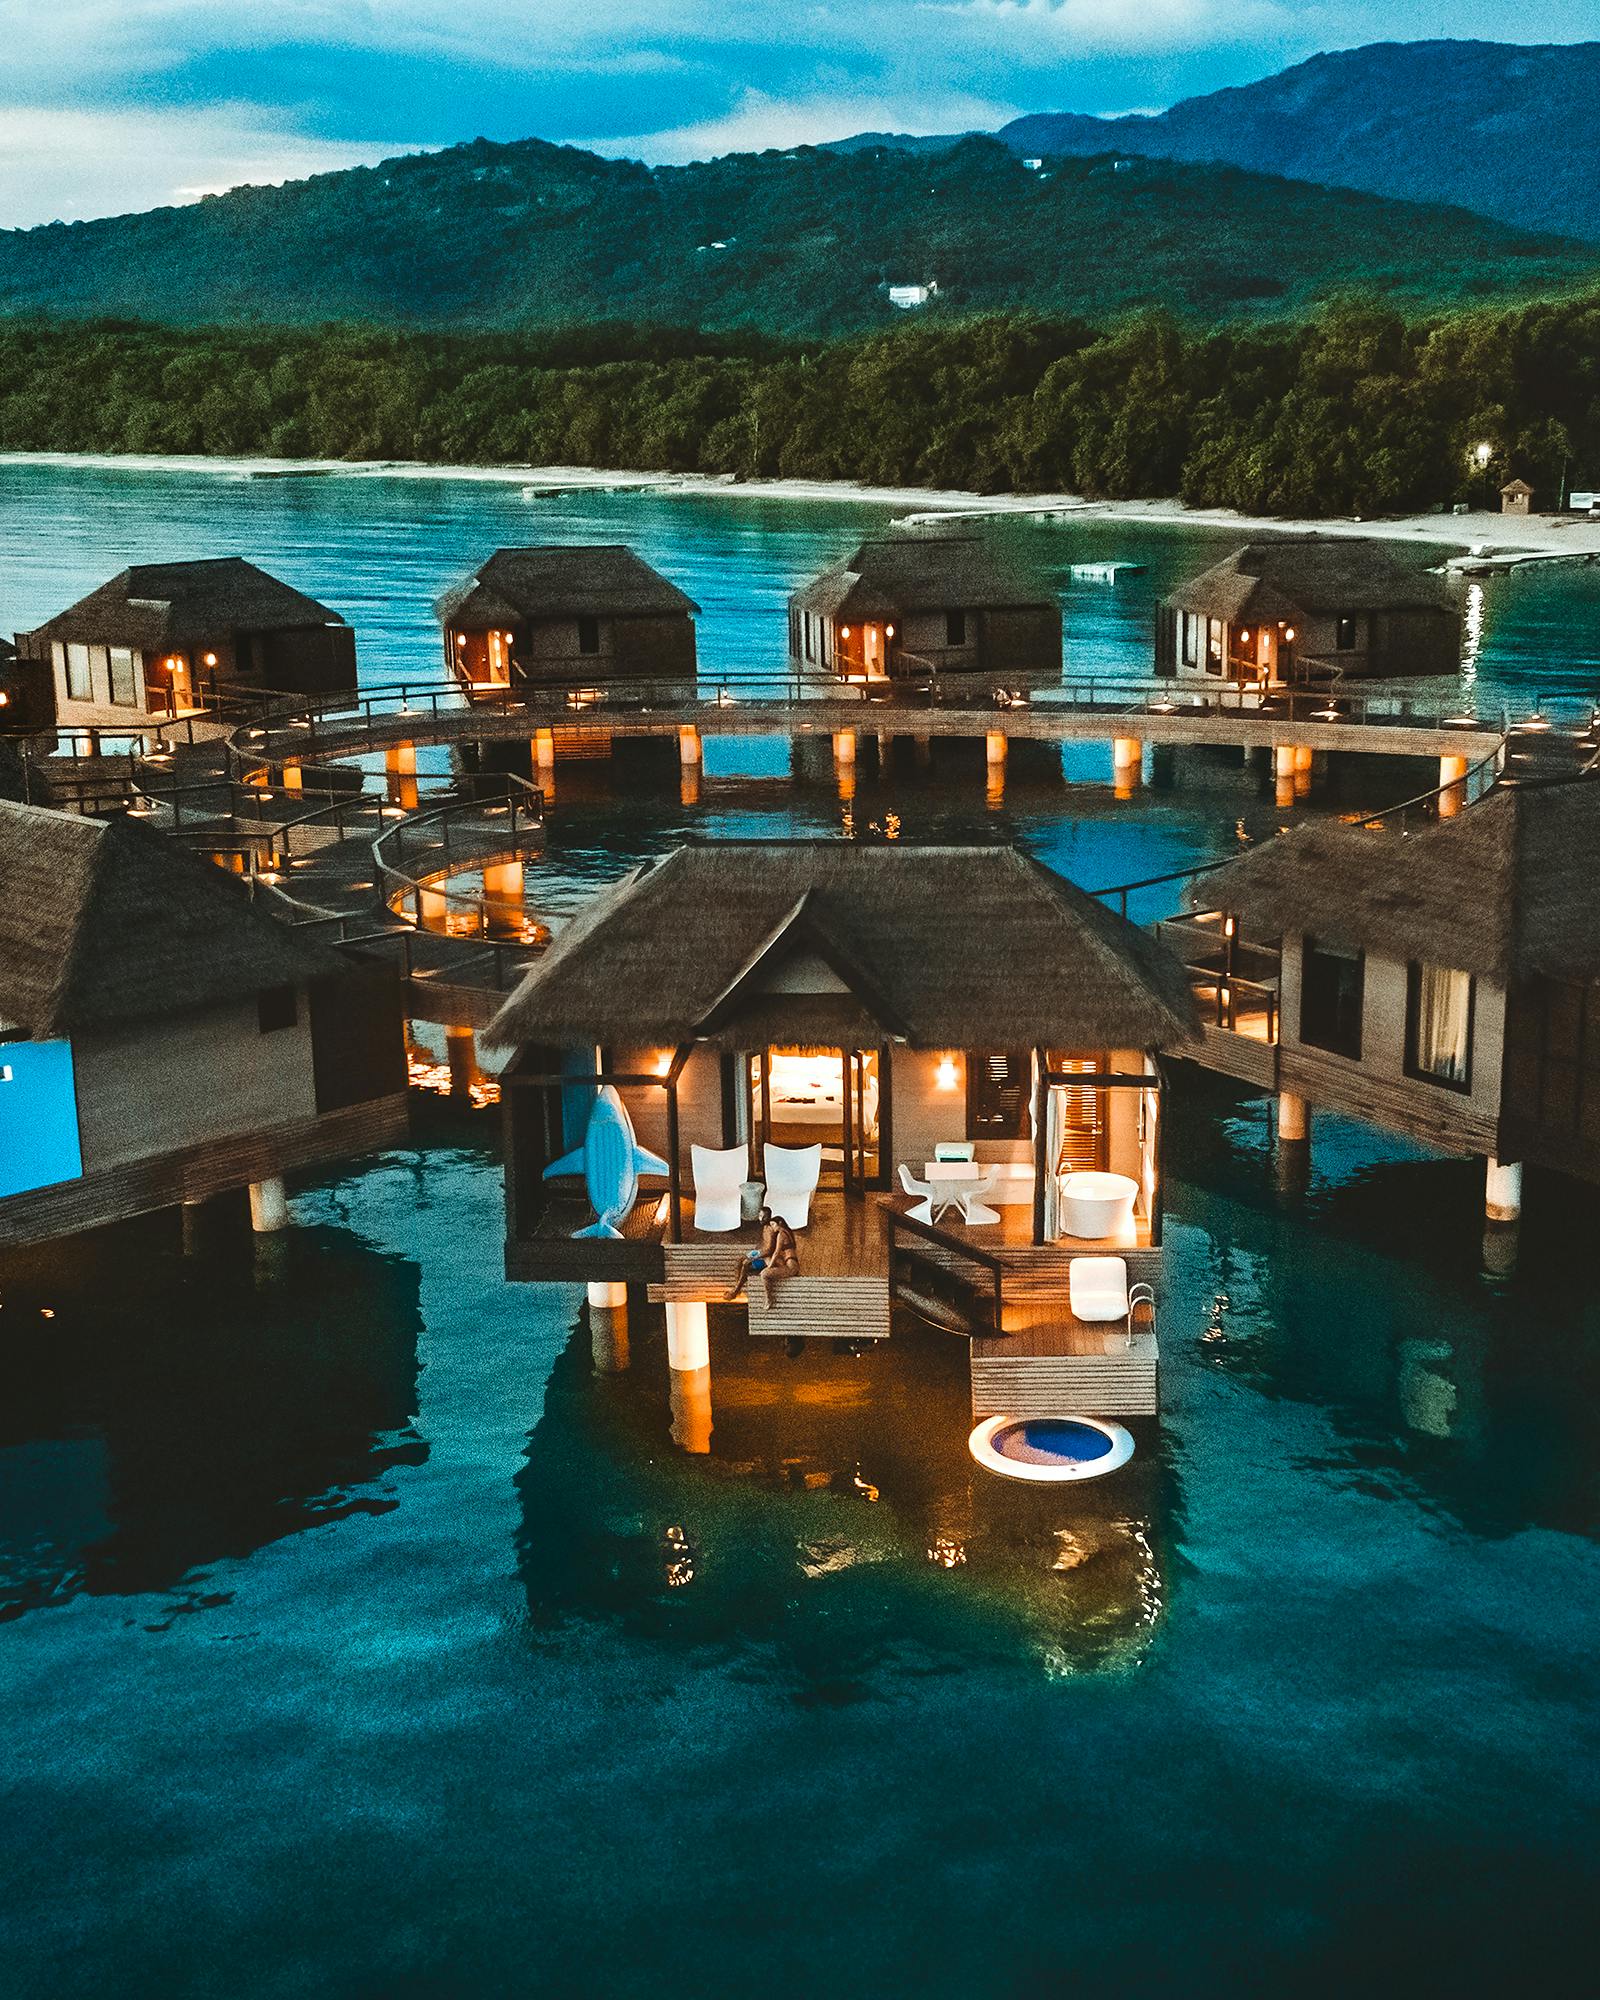 Sandals South Coast Resort Overwater Bungalows Honeymoon Dreams In Jamaica Away Lands